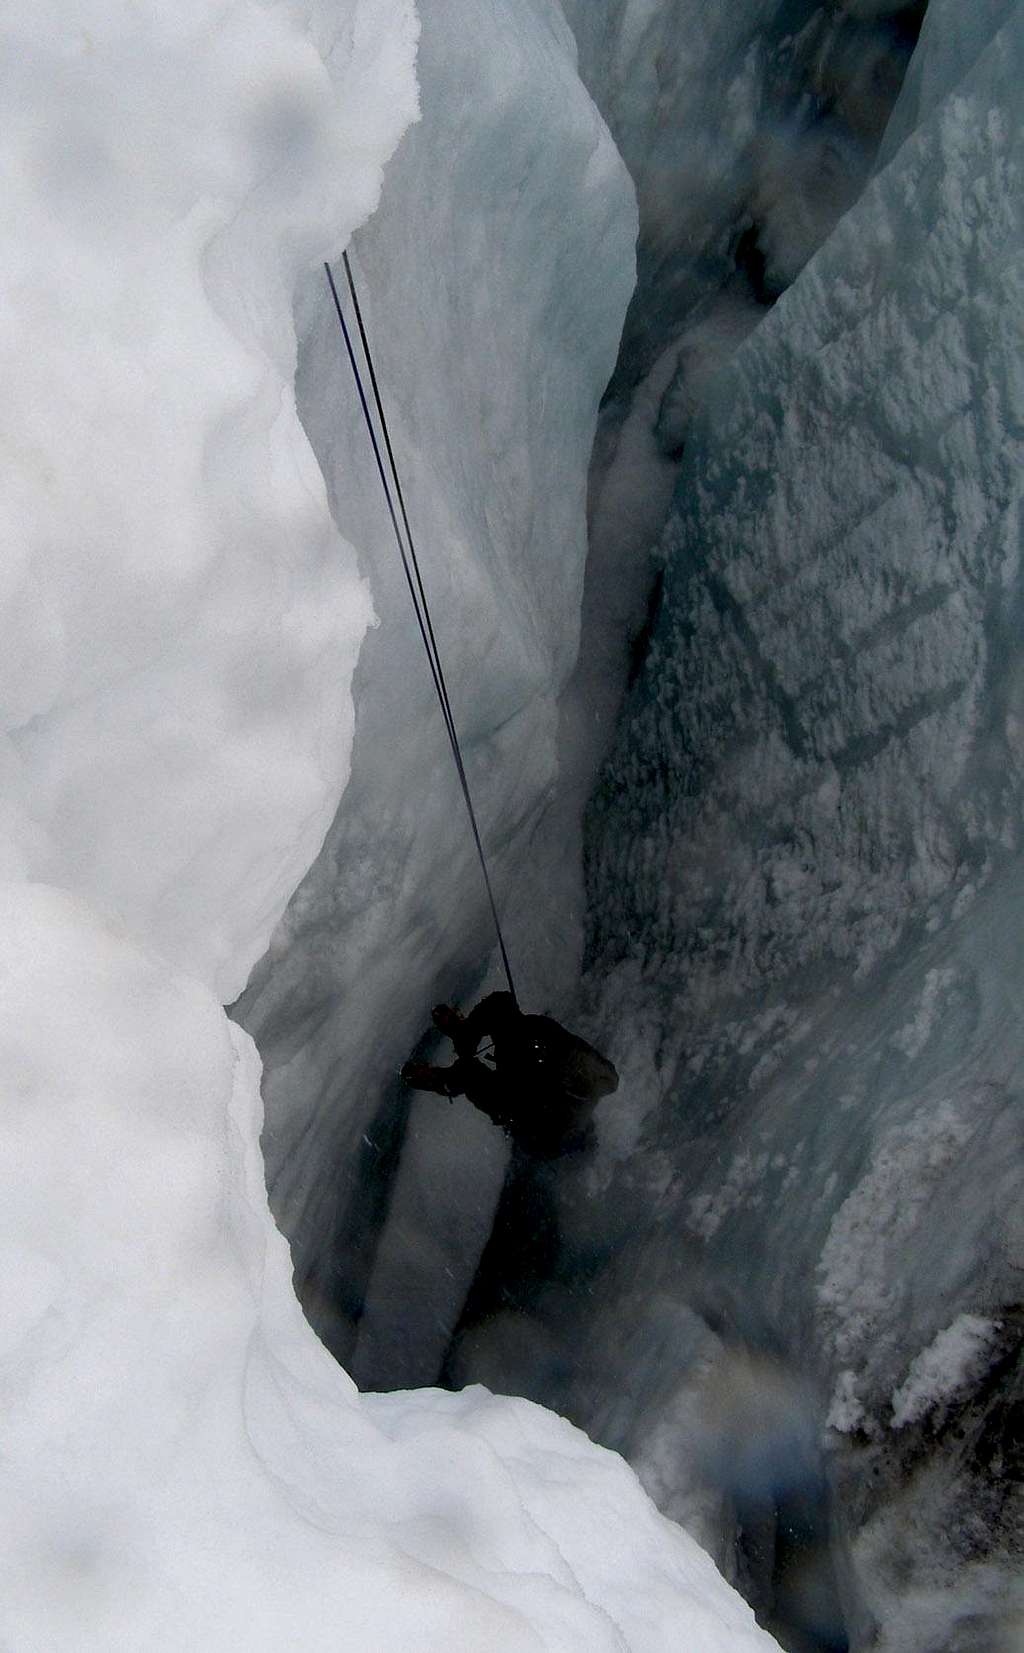 Hanging Inside The Crevasse